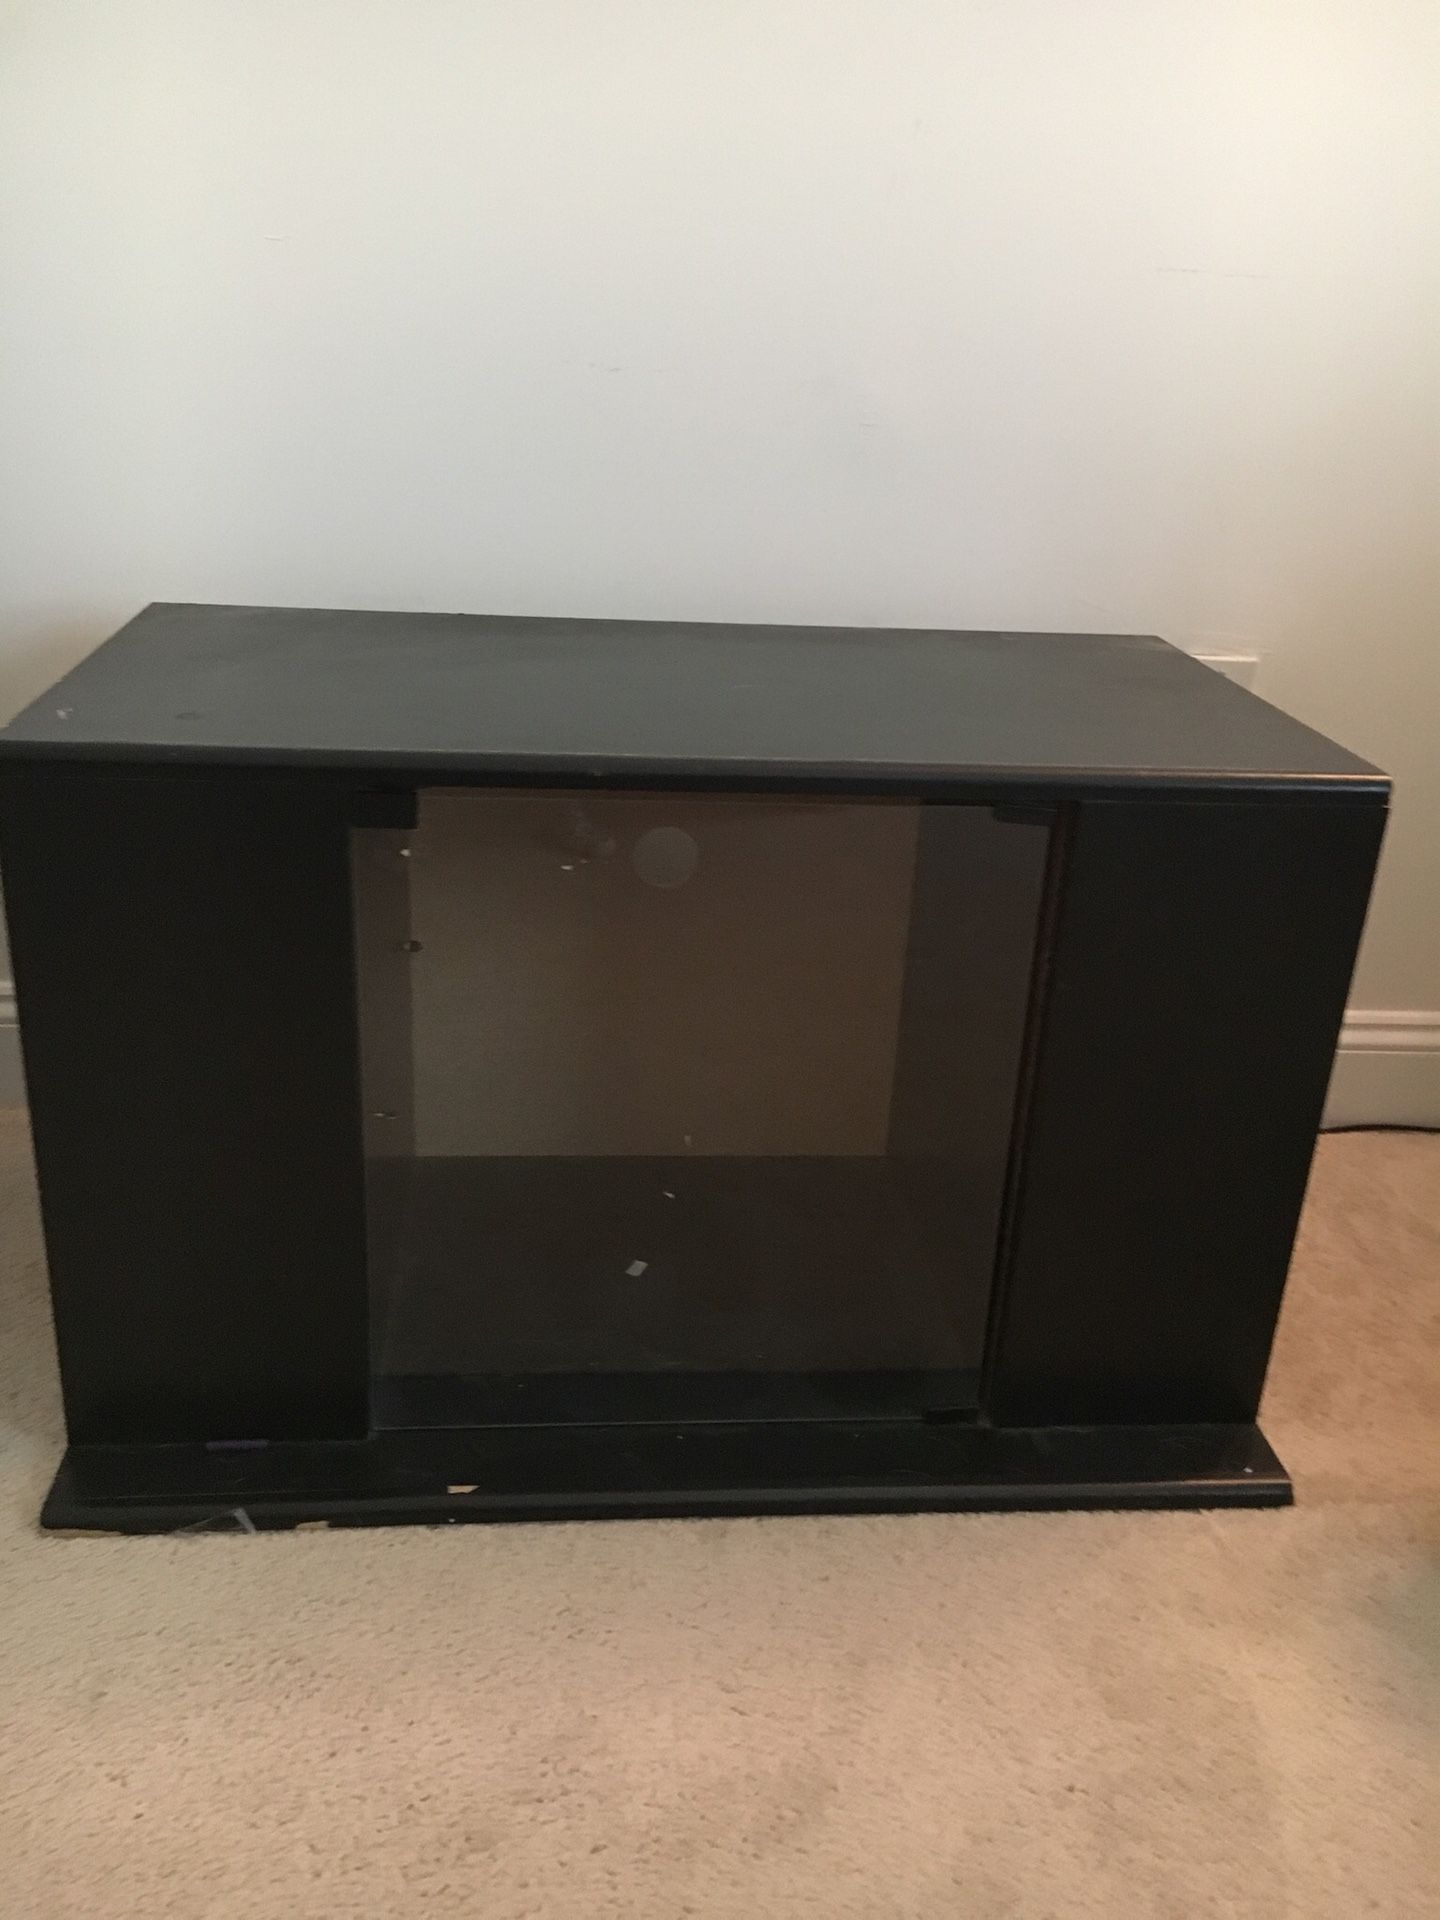 Black storage cabinet or entertainment center